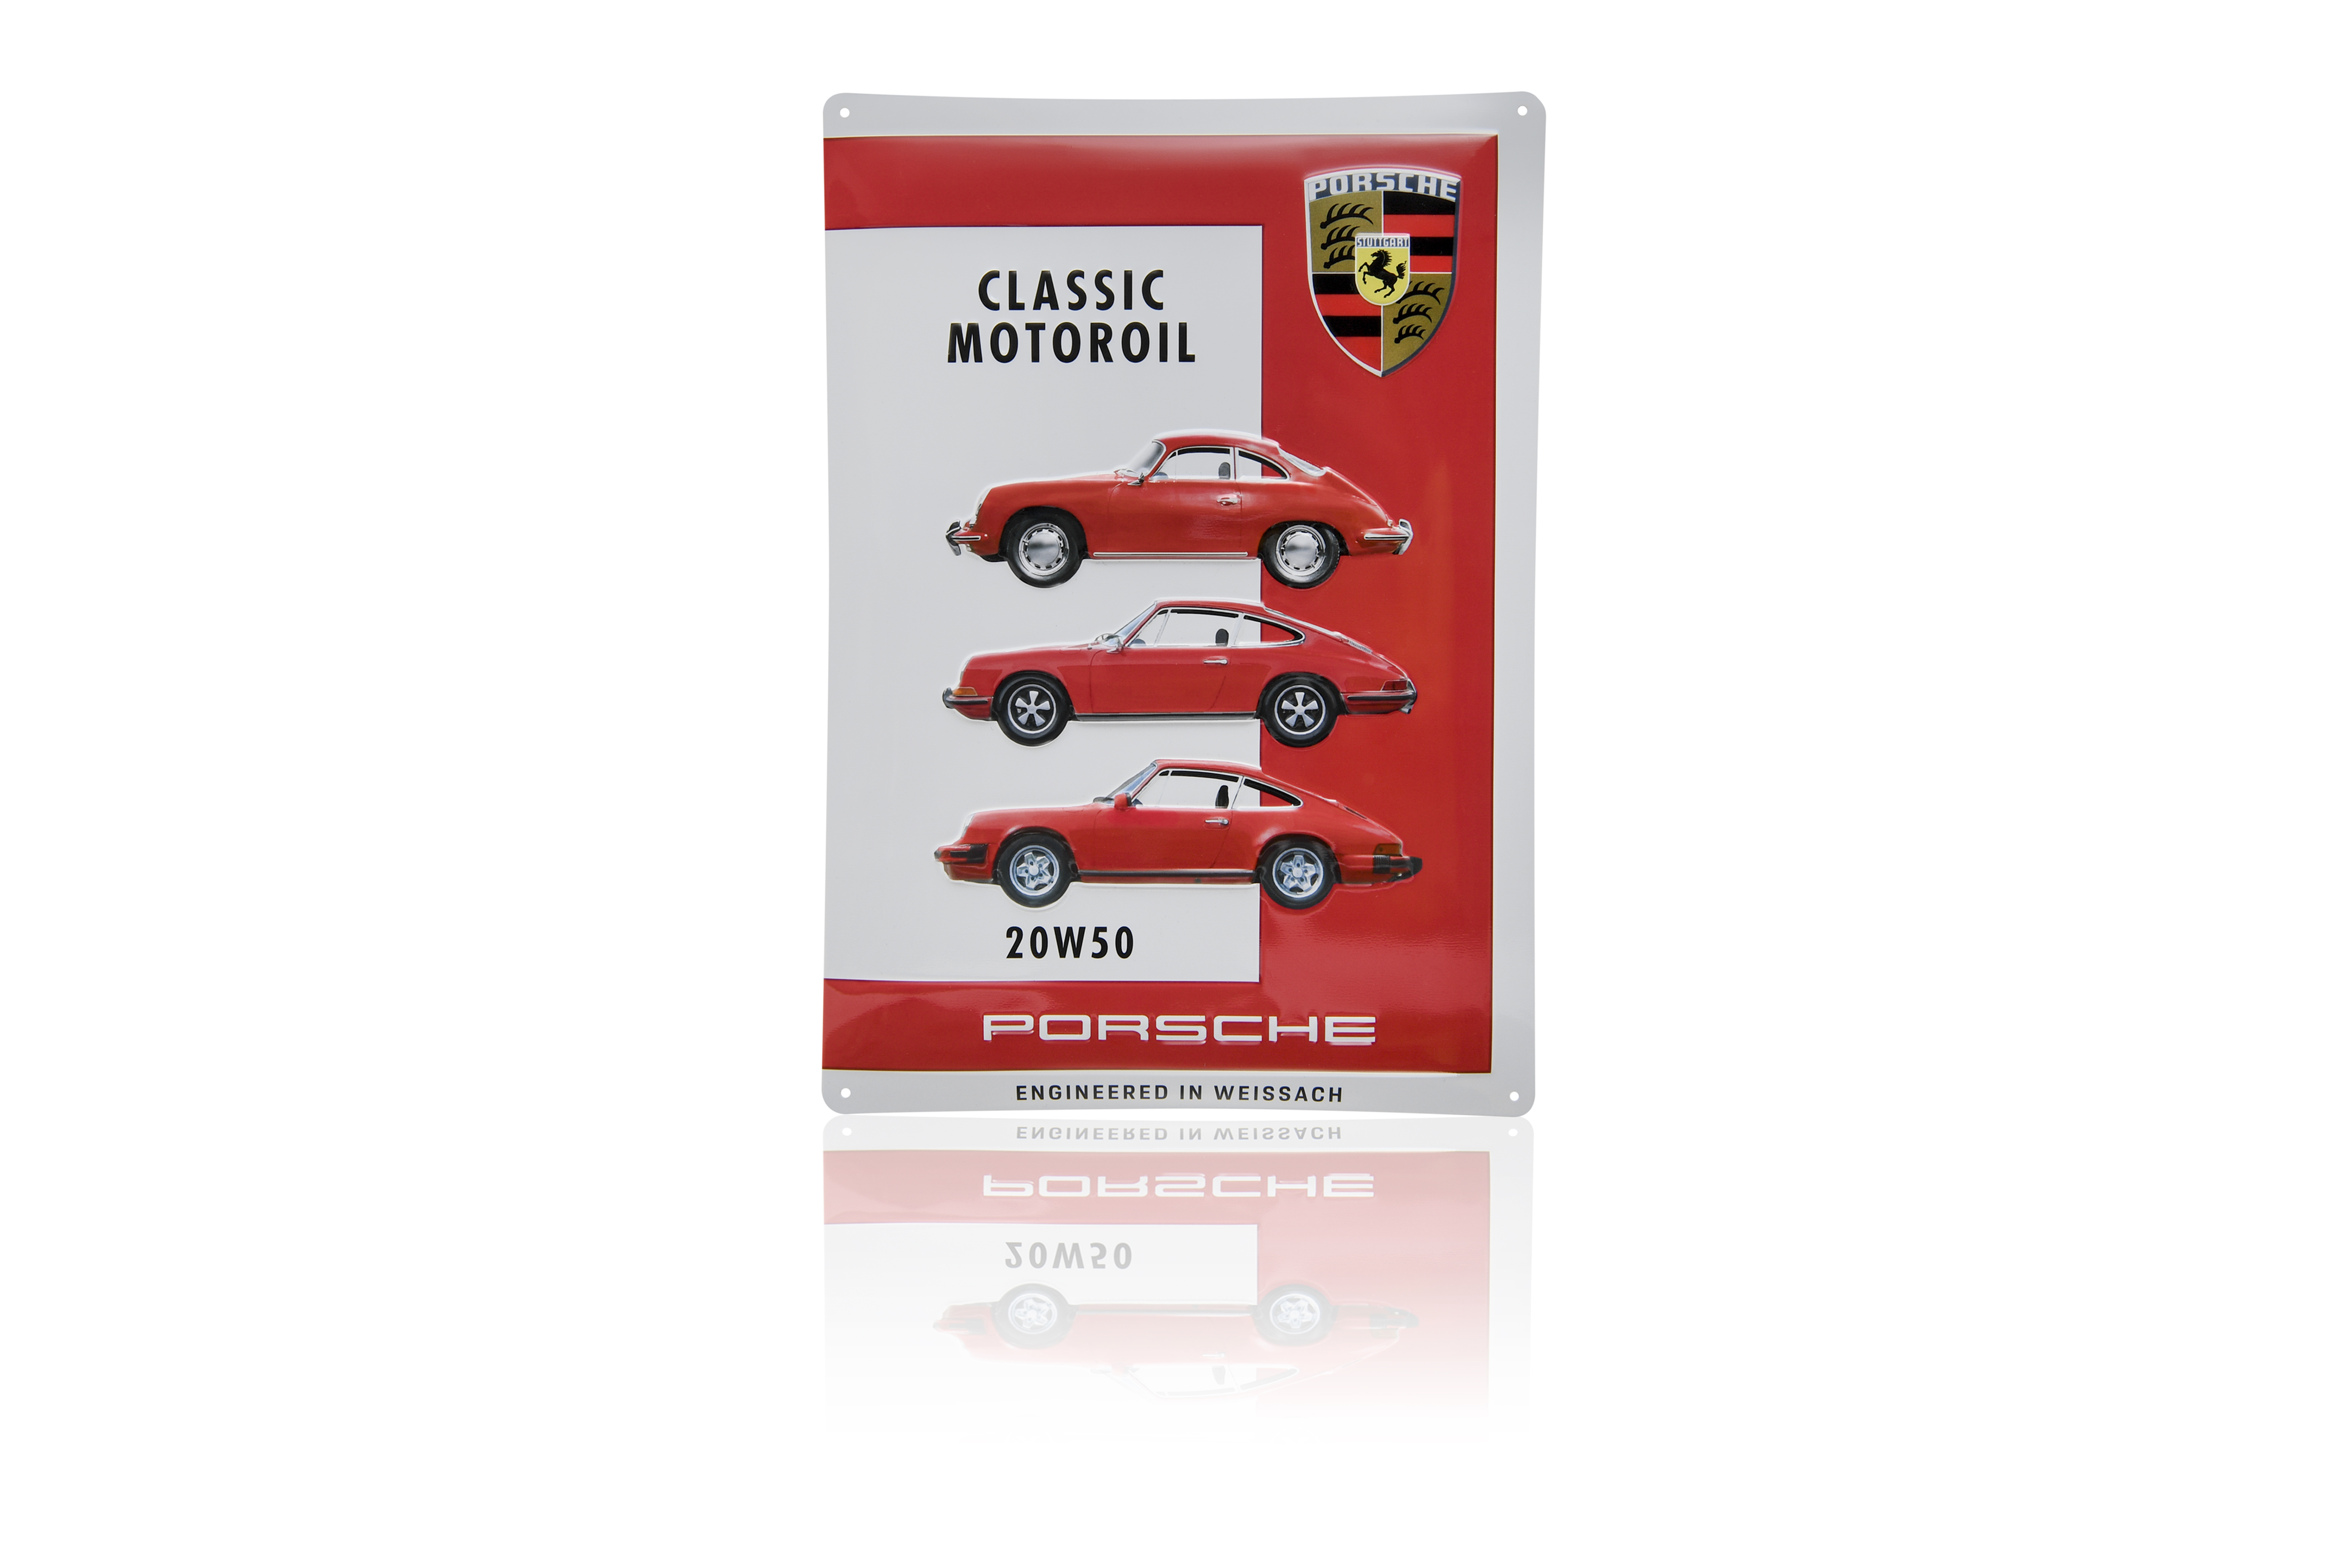 Porsche Classic Motoroil Tin Sign: 20W50 zoom